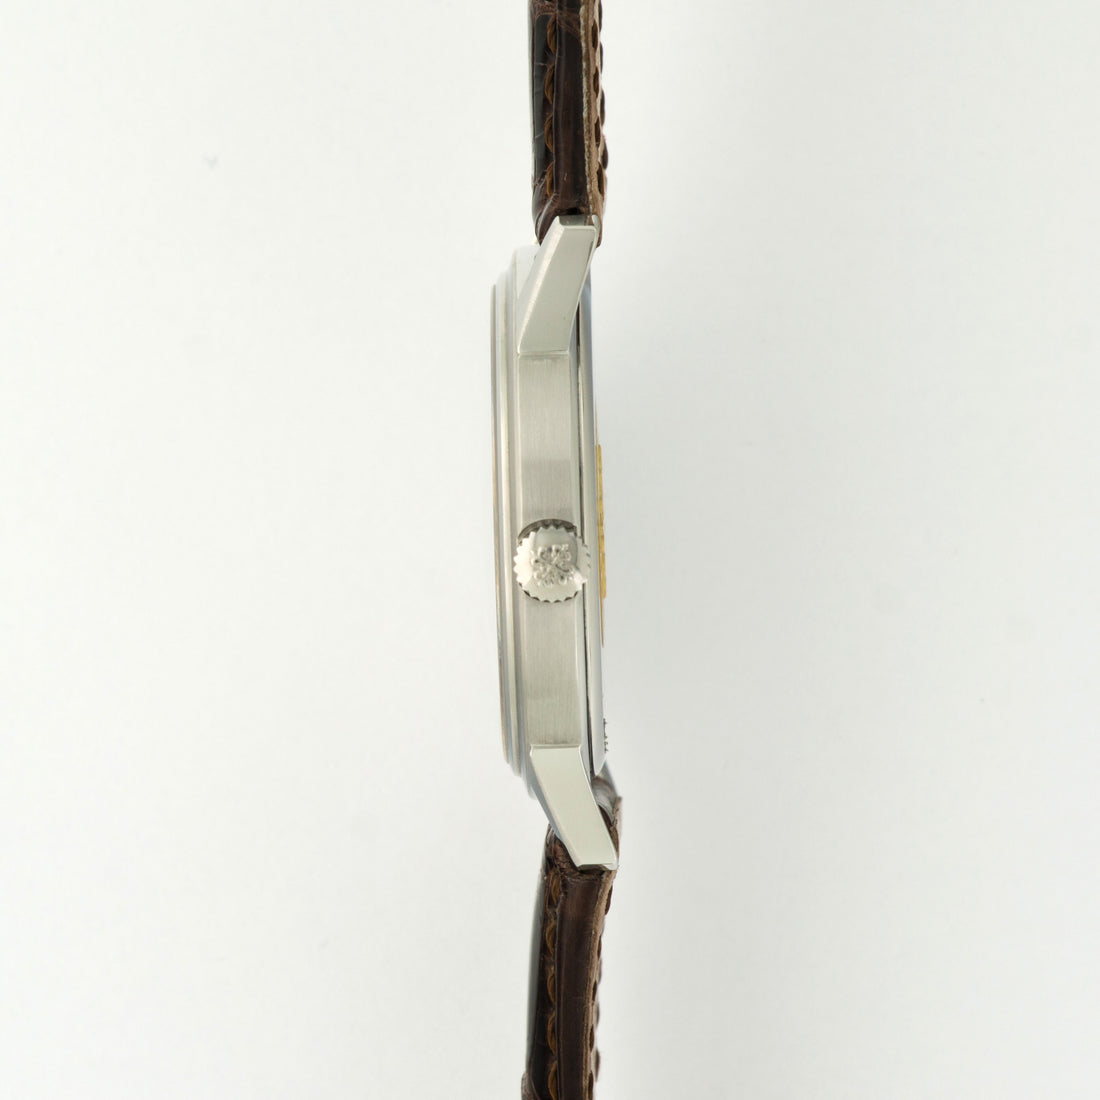 Patek Philippe Stainless Steel 150th Anniversary Watch Ref. 3718